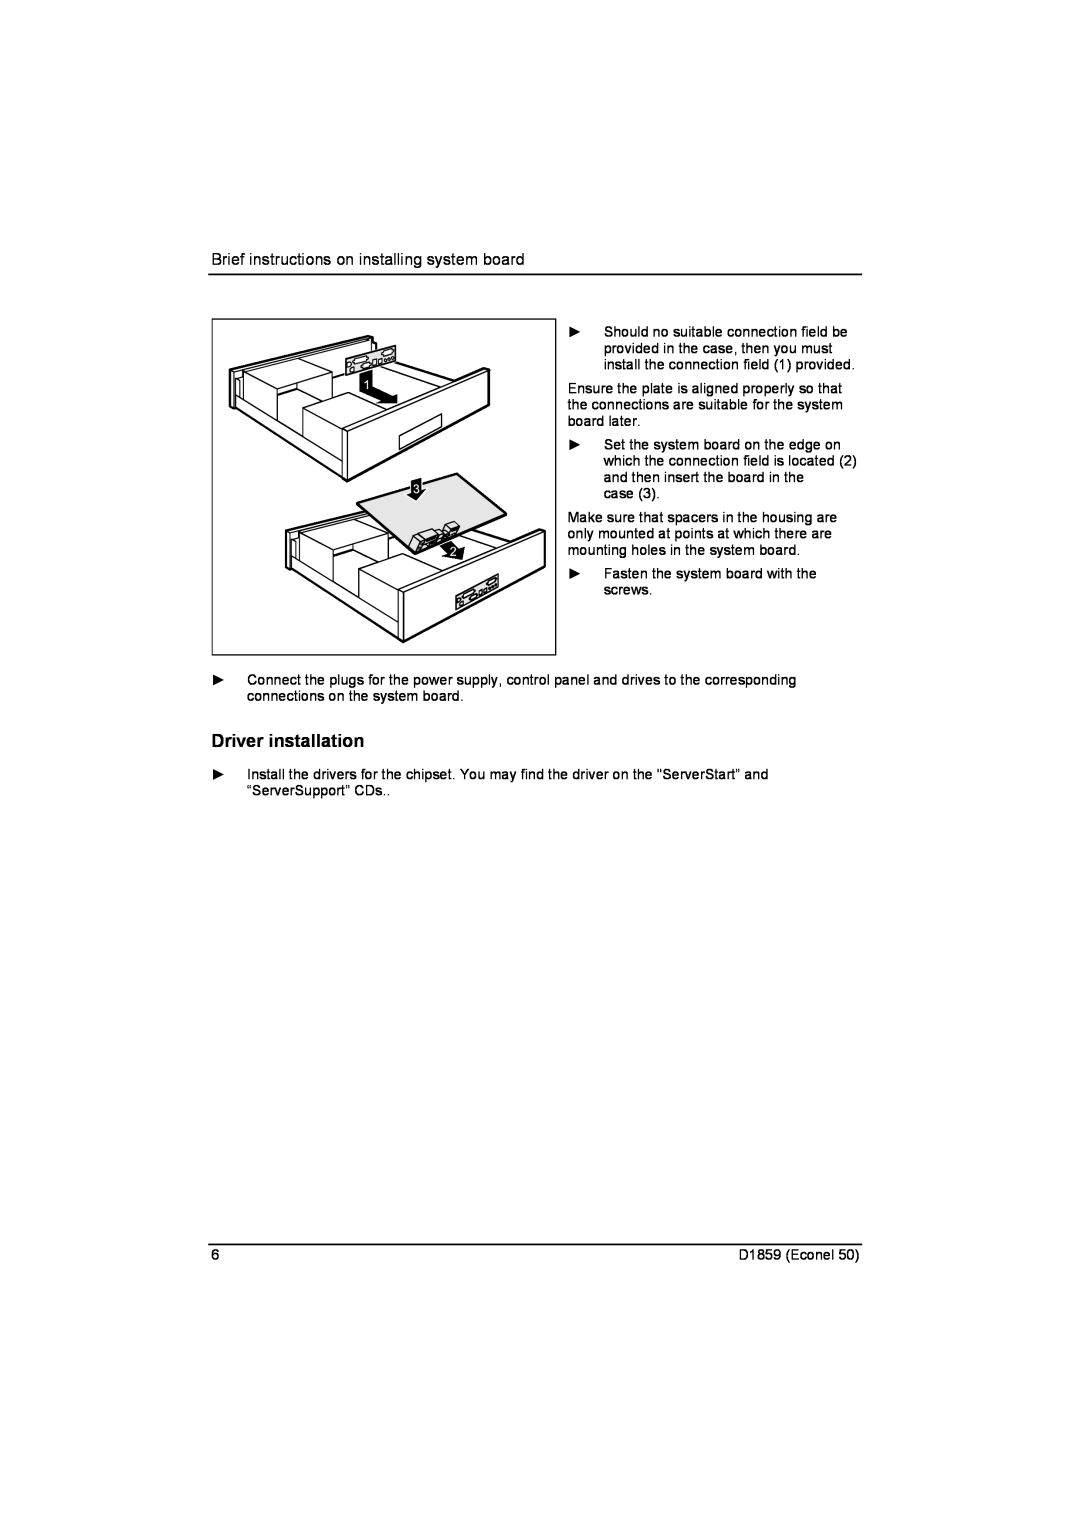 Fujitsu D1859 technical manual Driver installation, Brief instructions on installing system board 